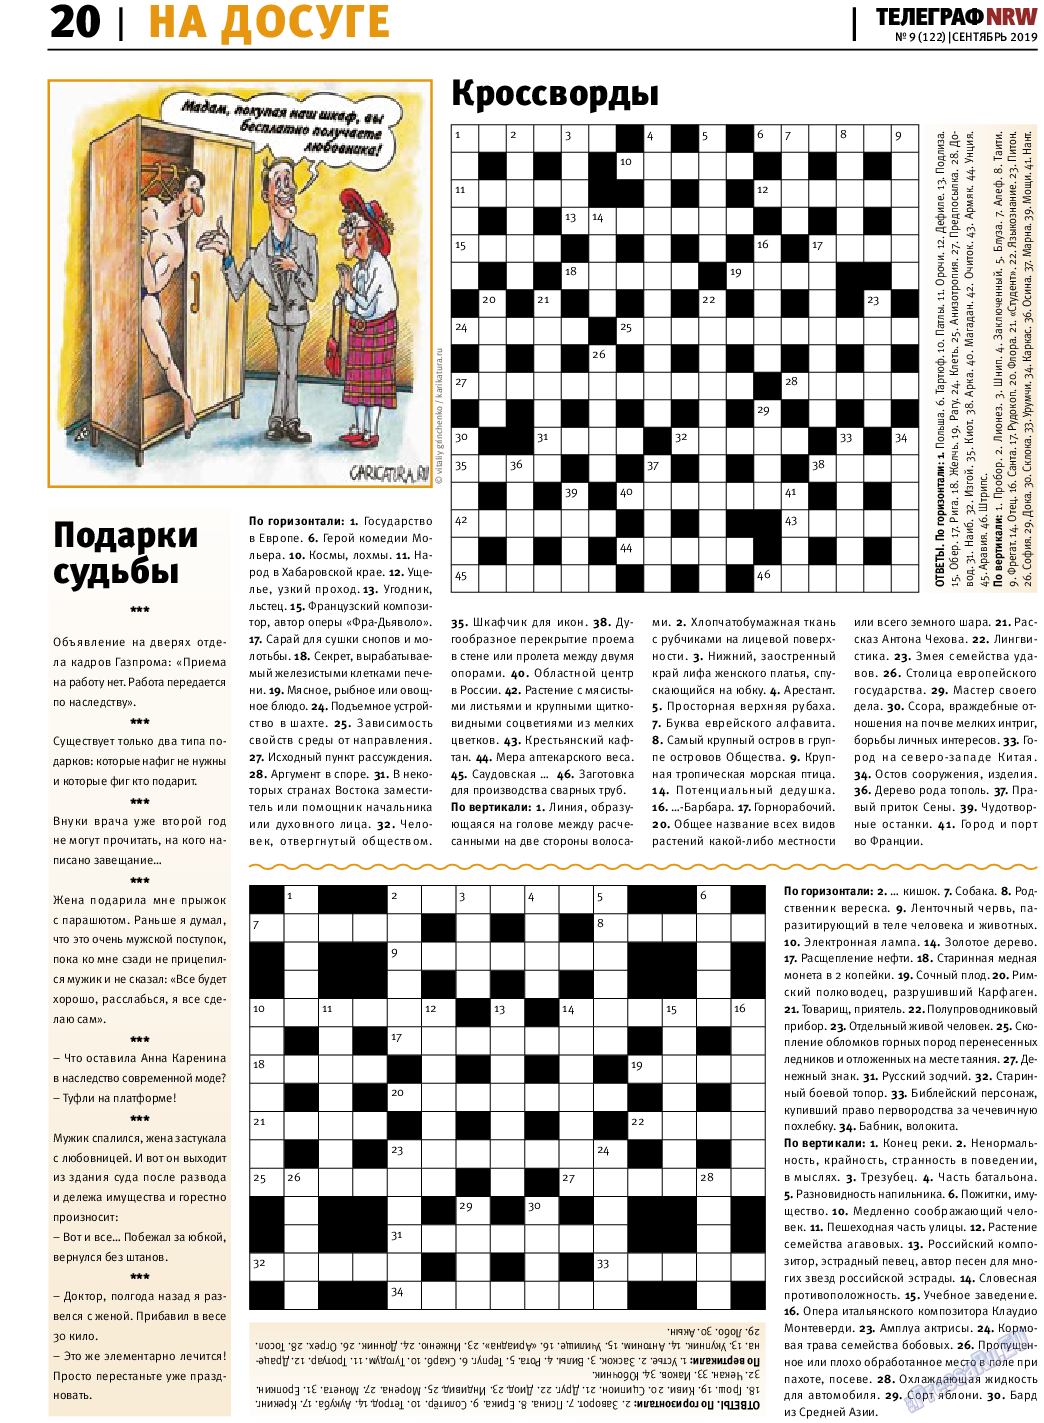 Телеграф NRW, газета. 2019 №9 стр.20